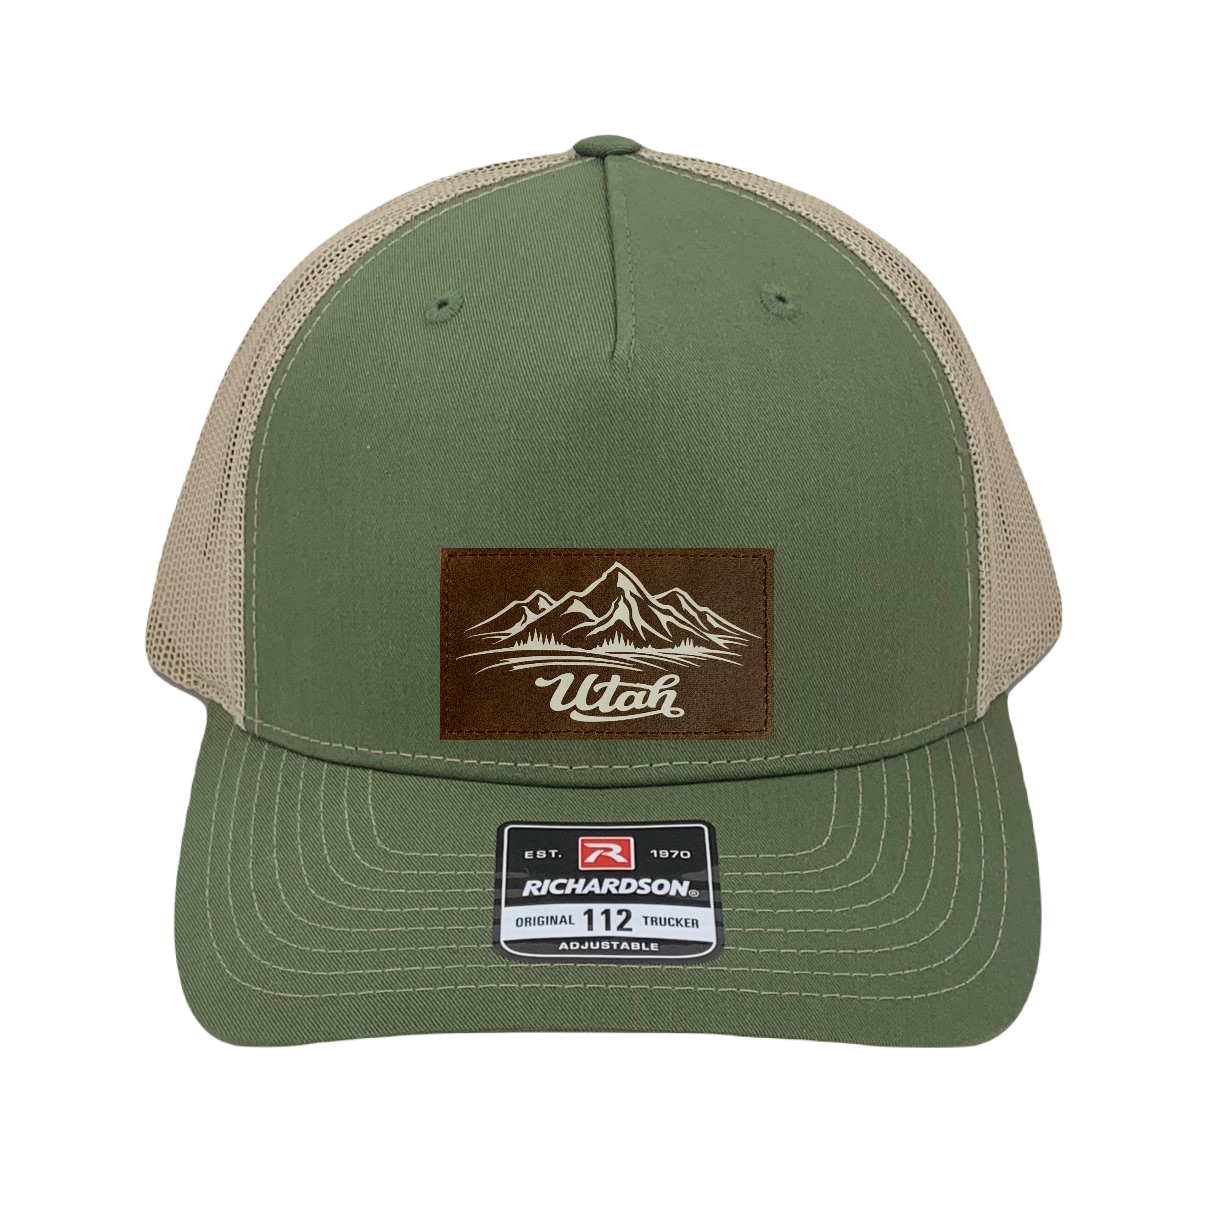 Richardson 112 trucker hat, olive/tan 5 panel with Utah Mountains